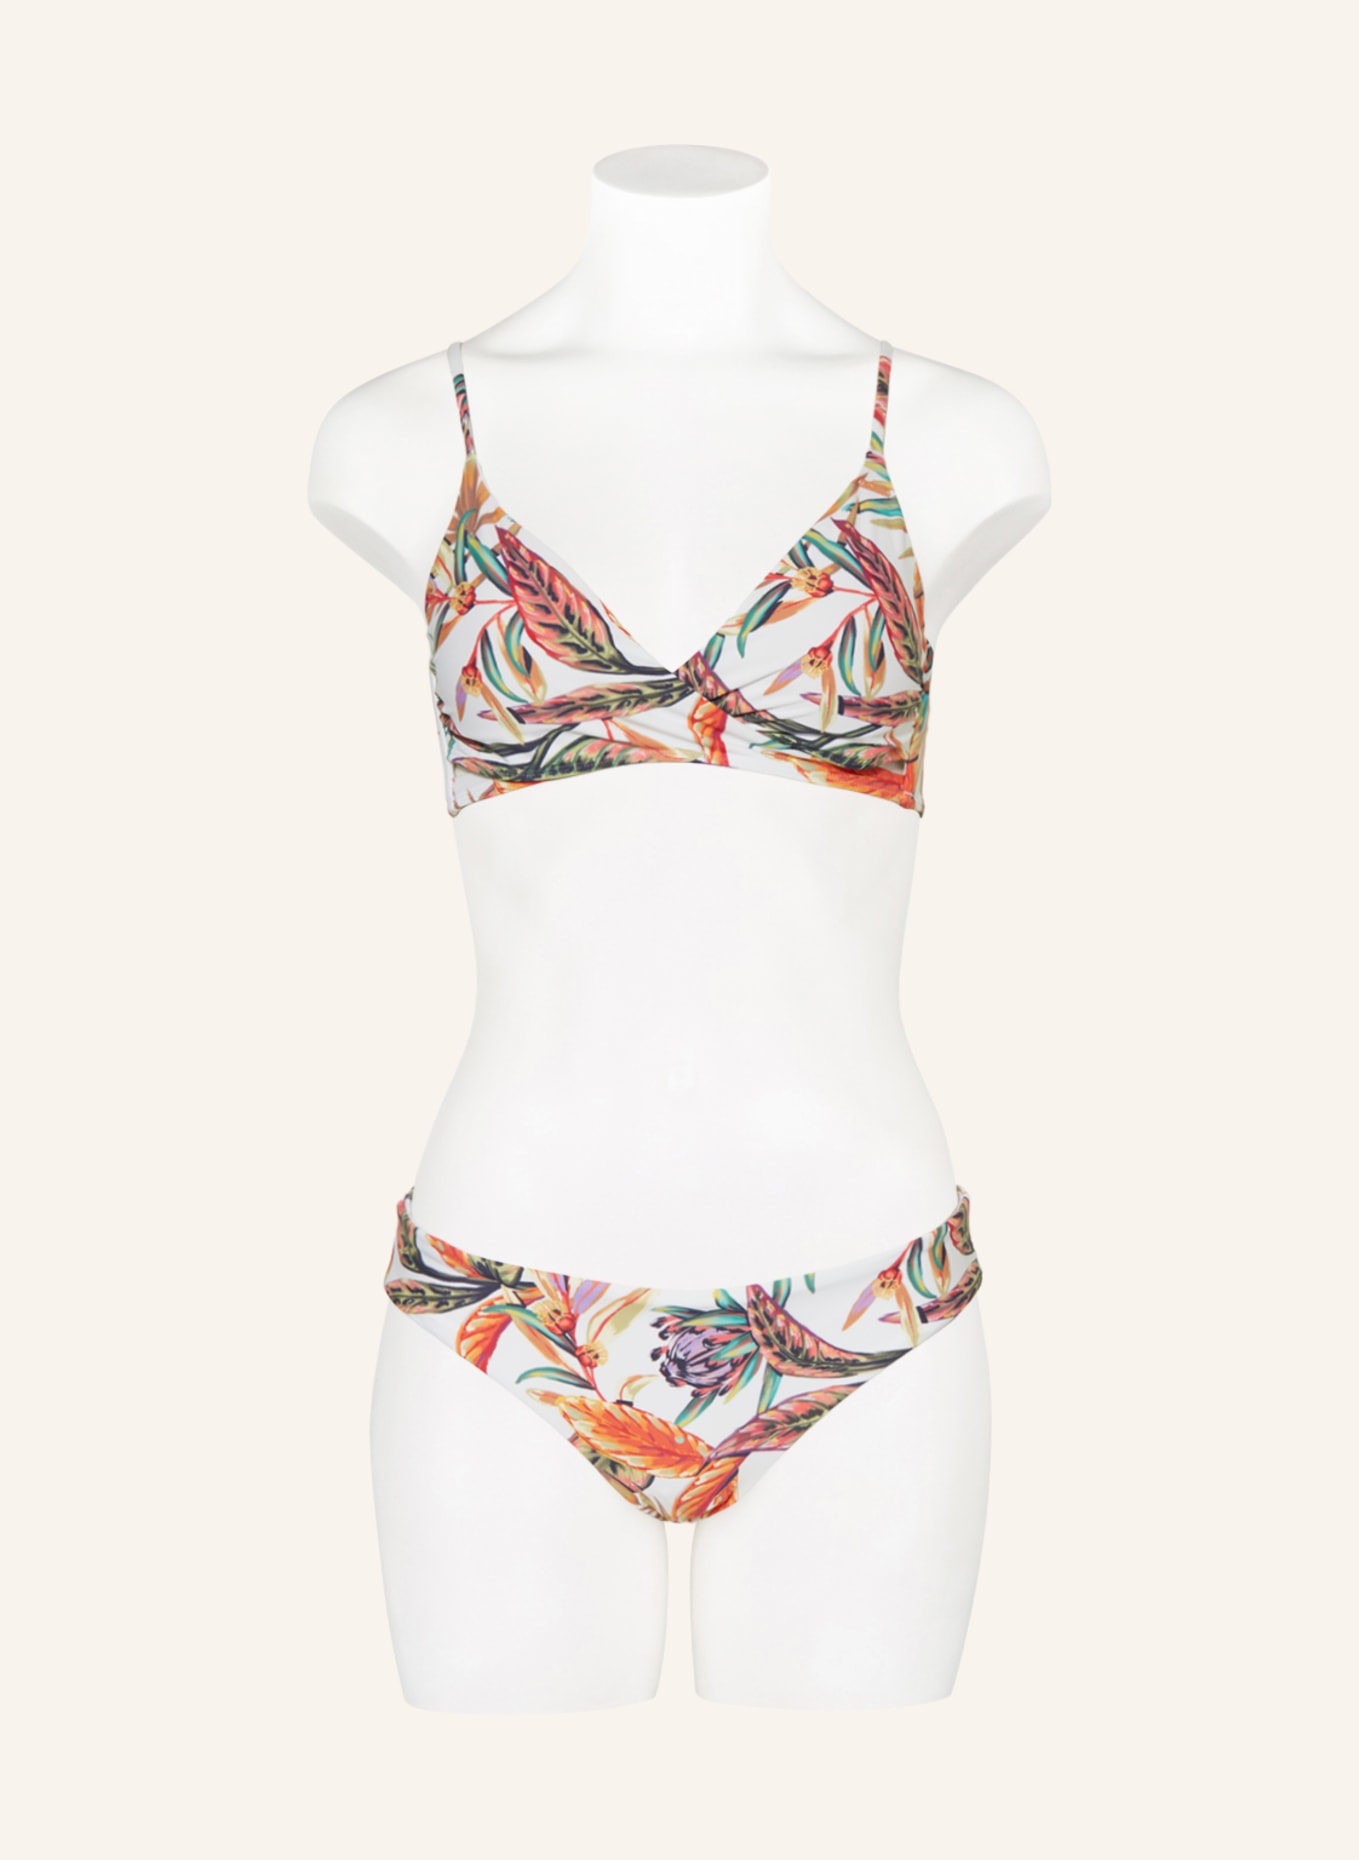 O'NEILL Bralette-Bikini BAAY - MAOI in Wickeloptik, Farbe: ECRU/ ORANGE/ GRÜN (Bild 2)